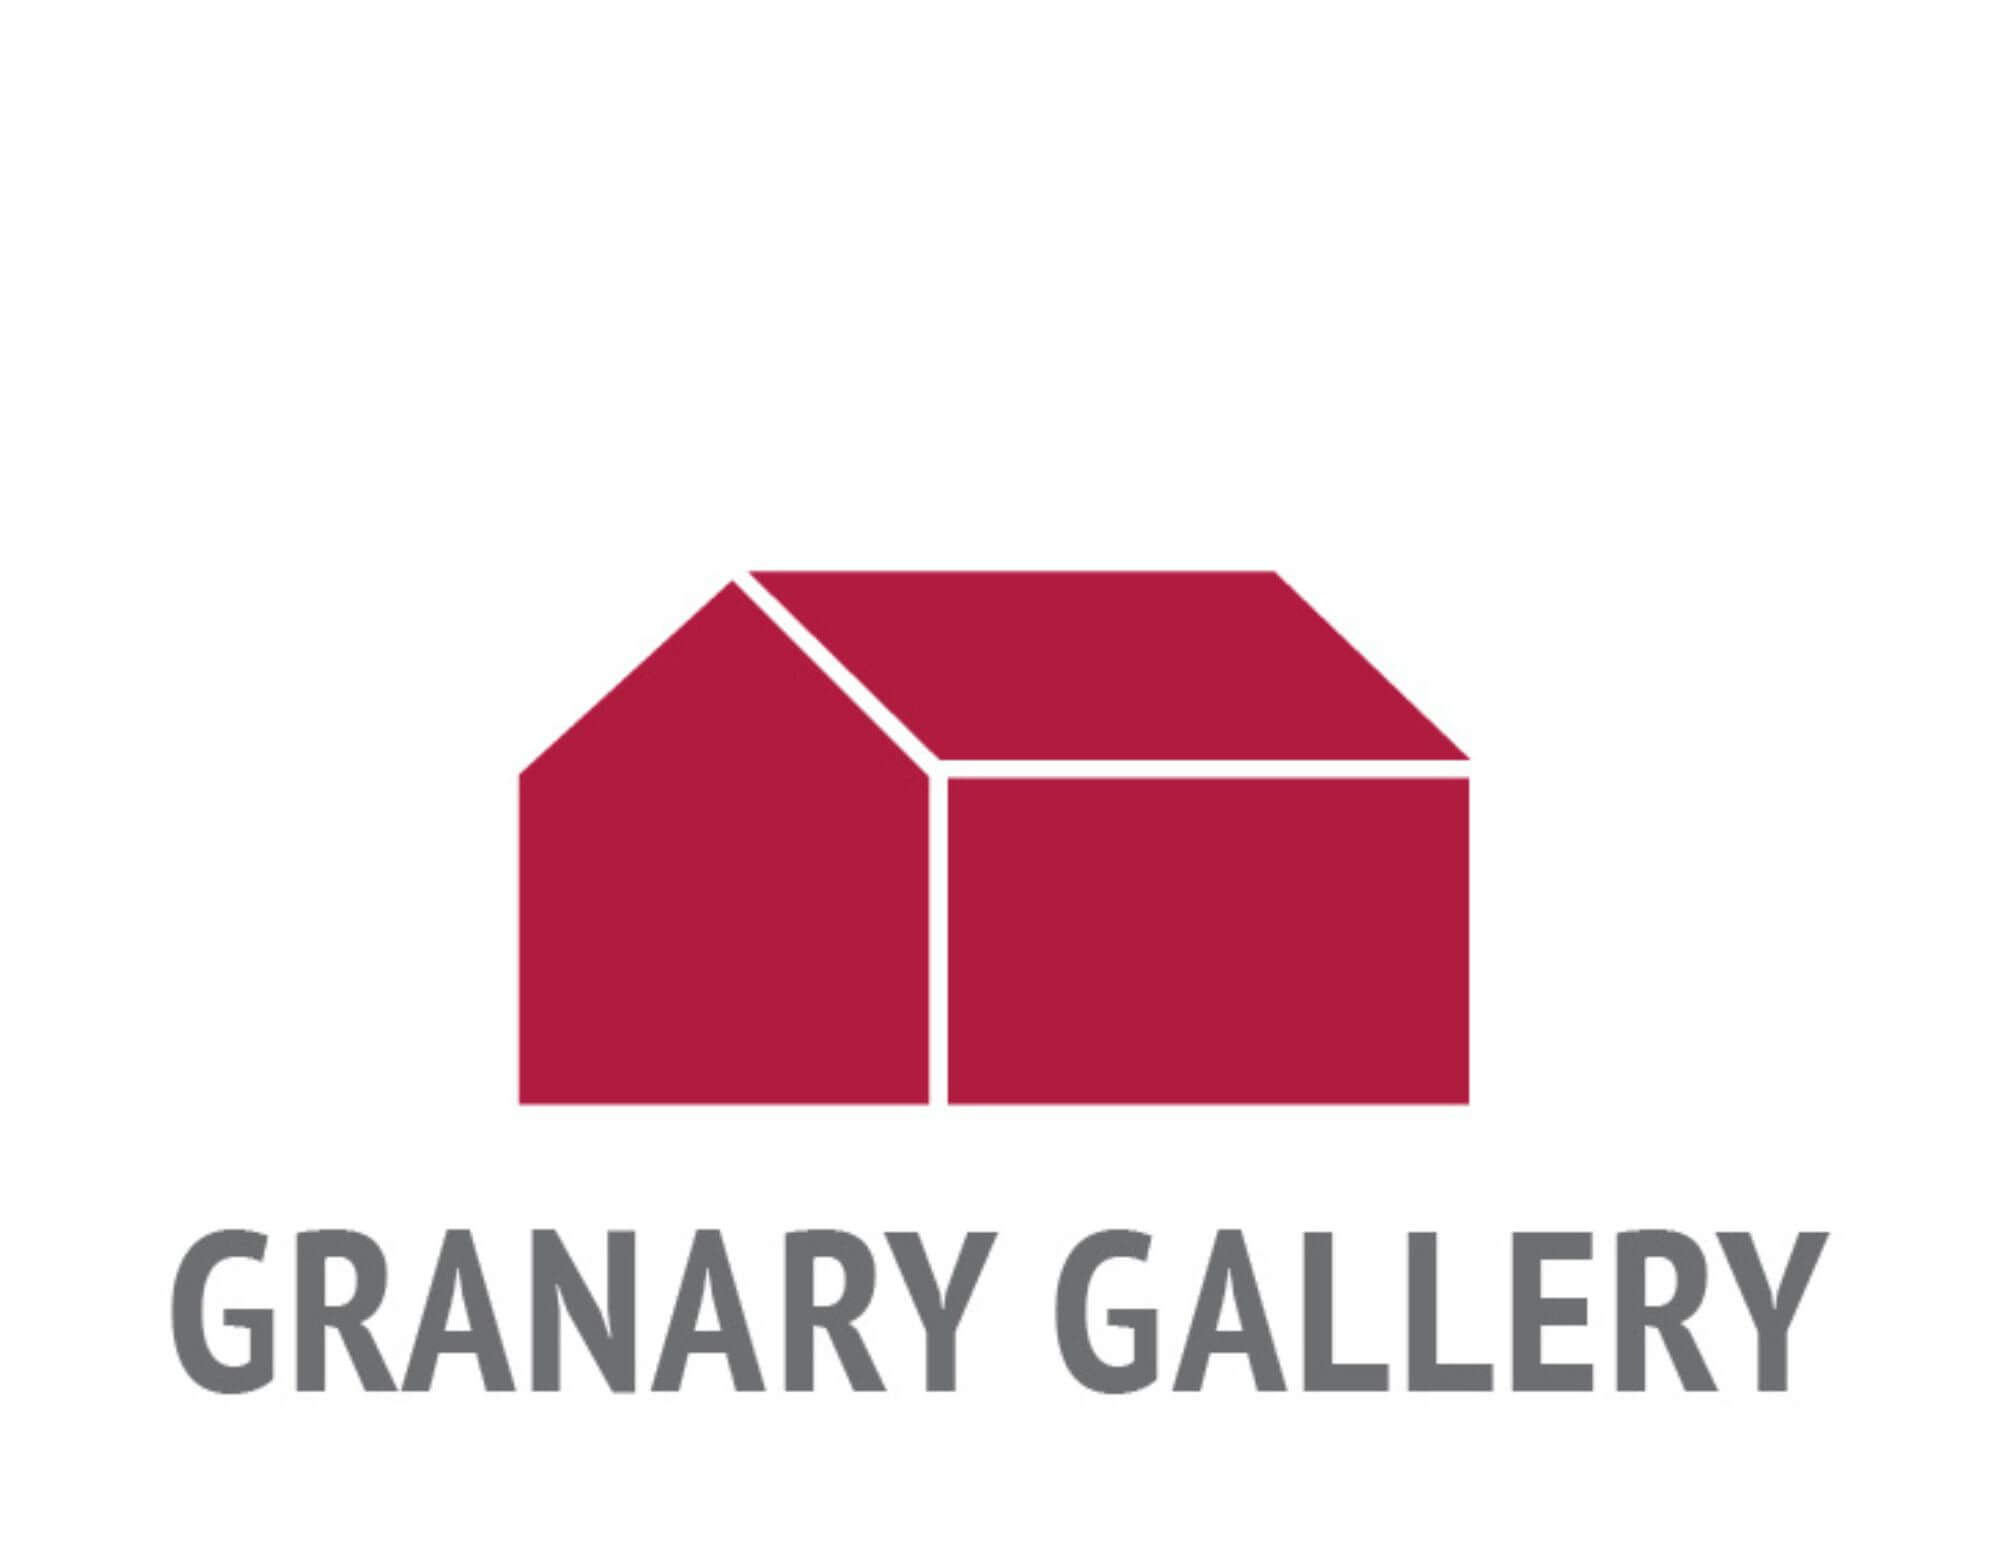 Granary Gallery